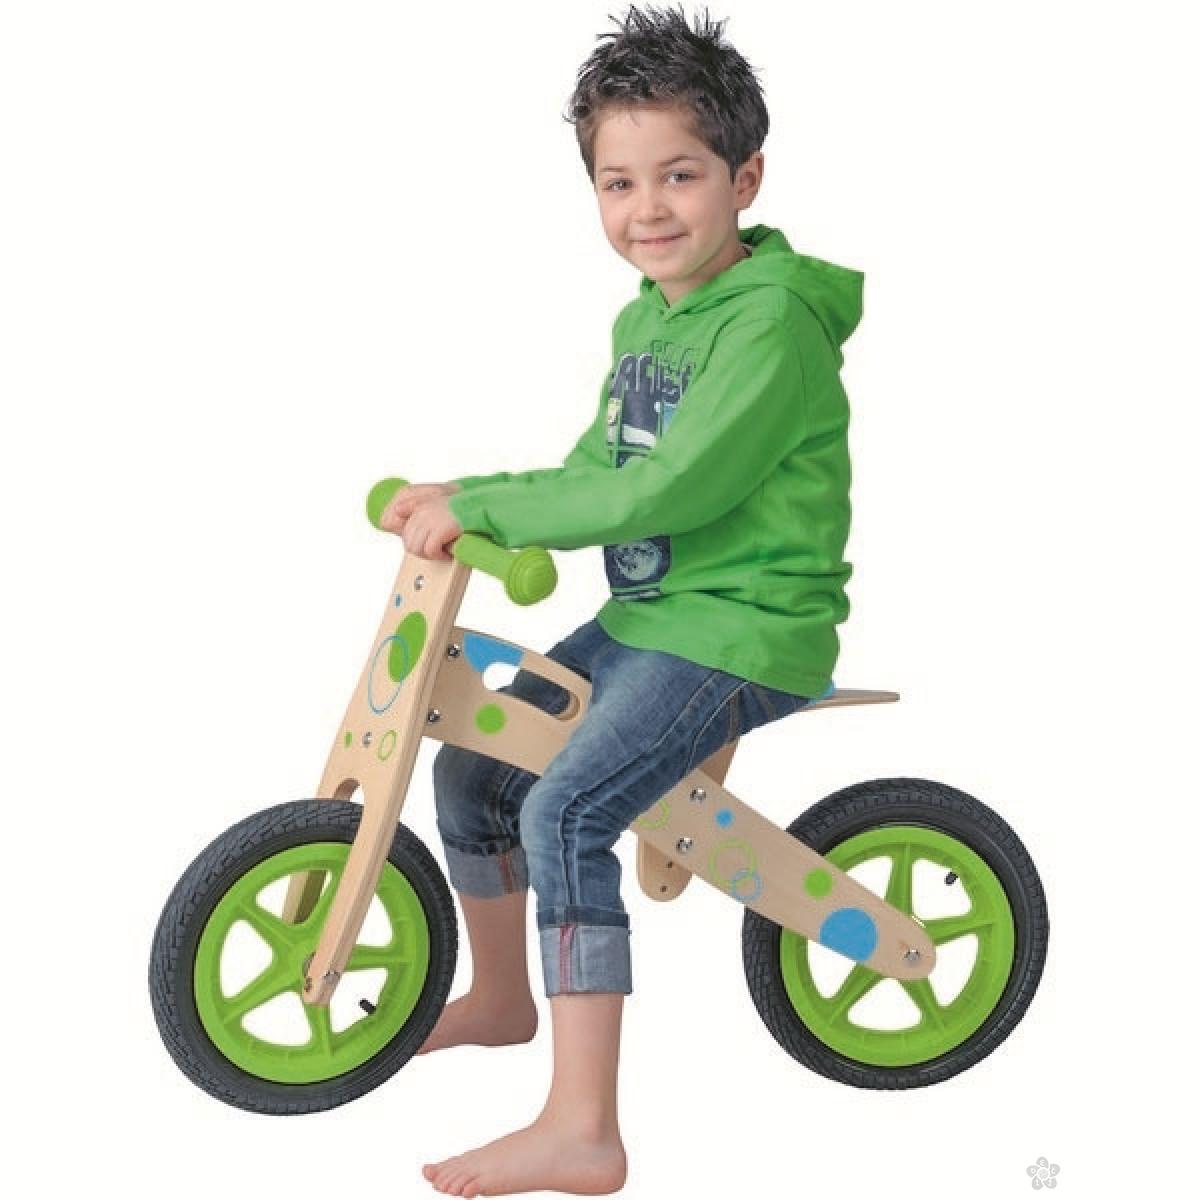 Balans bicikl drveni, model 91189 | Dečji sajt